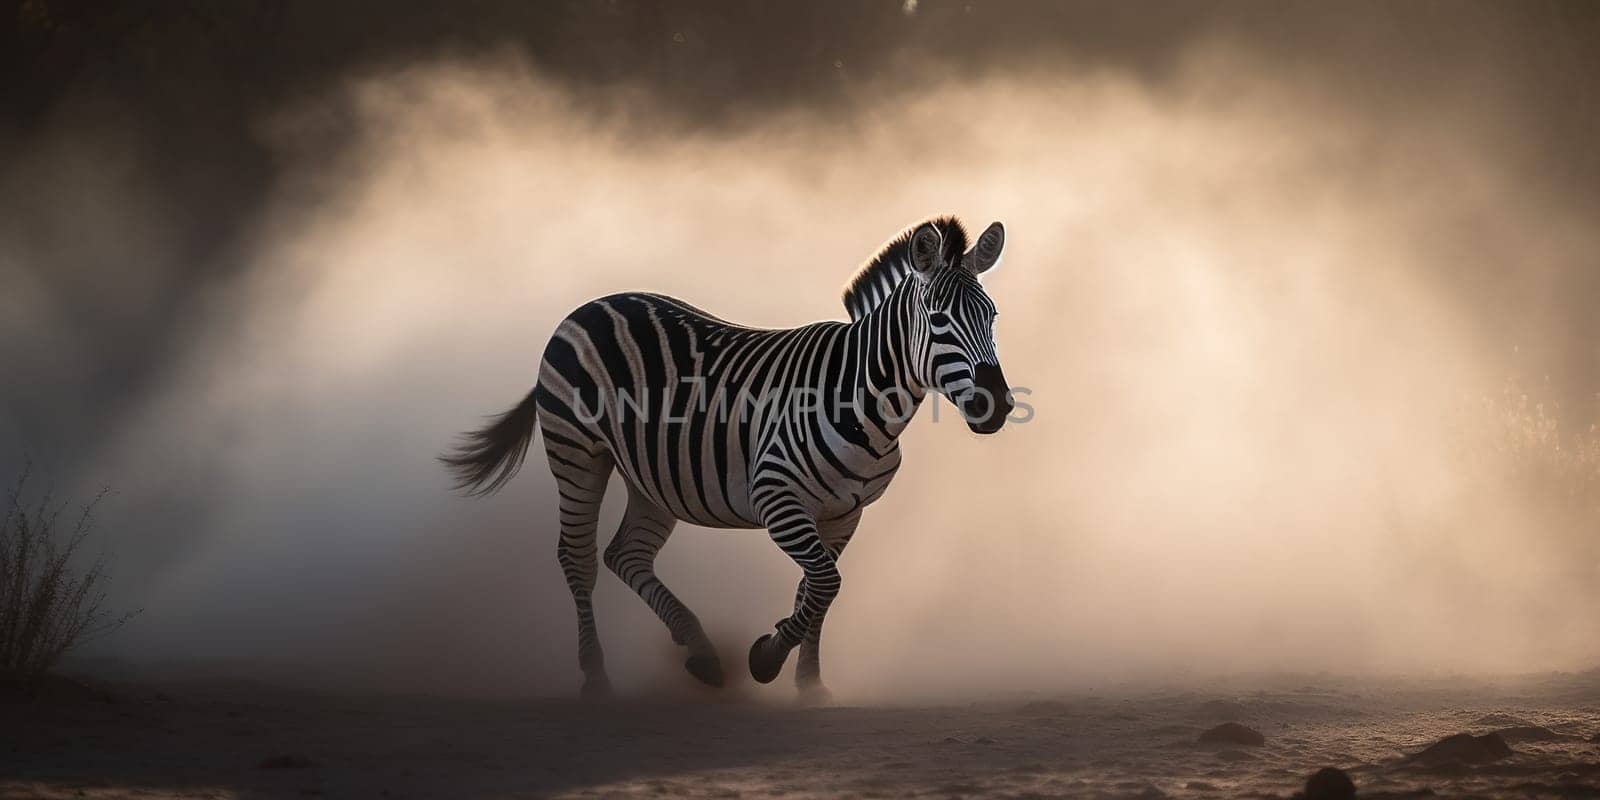 Zebra wandering through the steppe by tan4ikk1